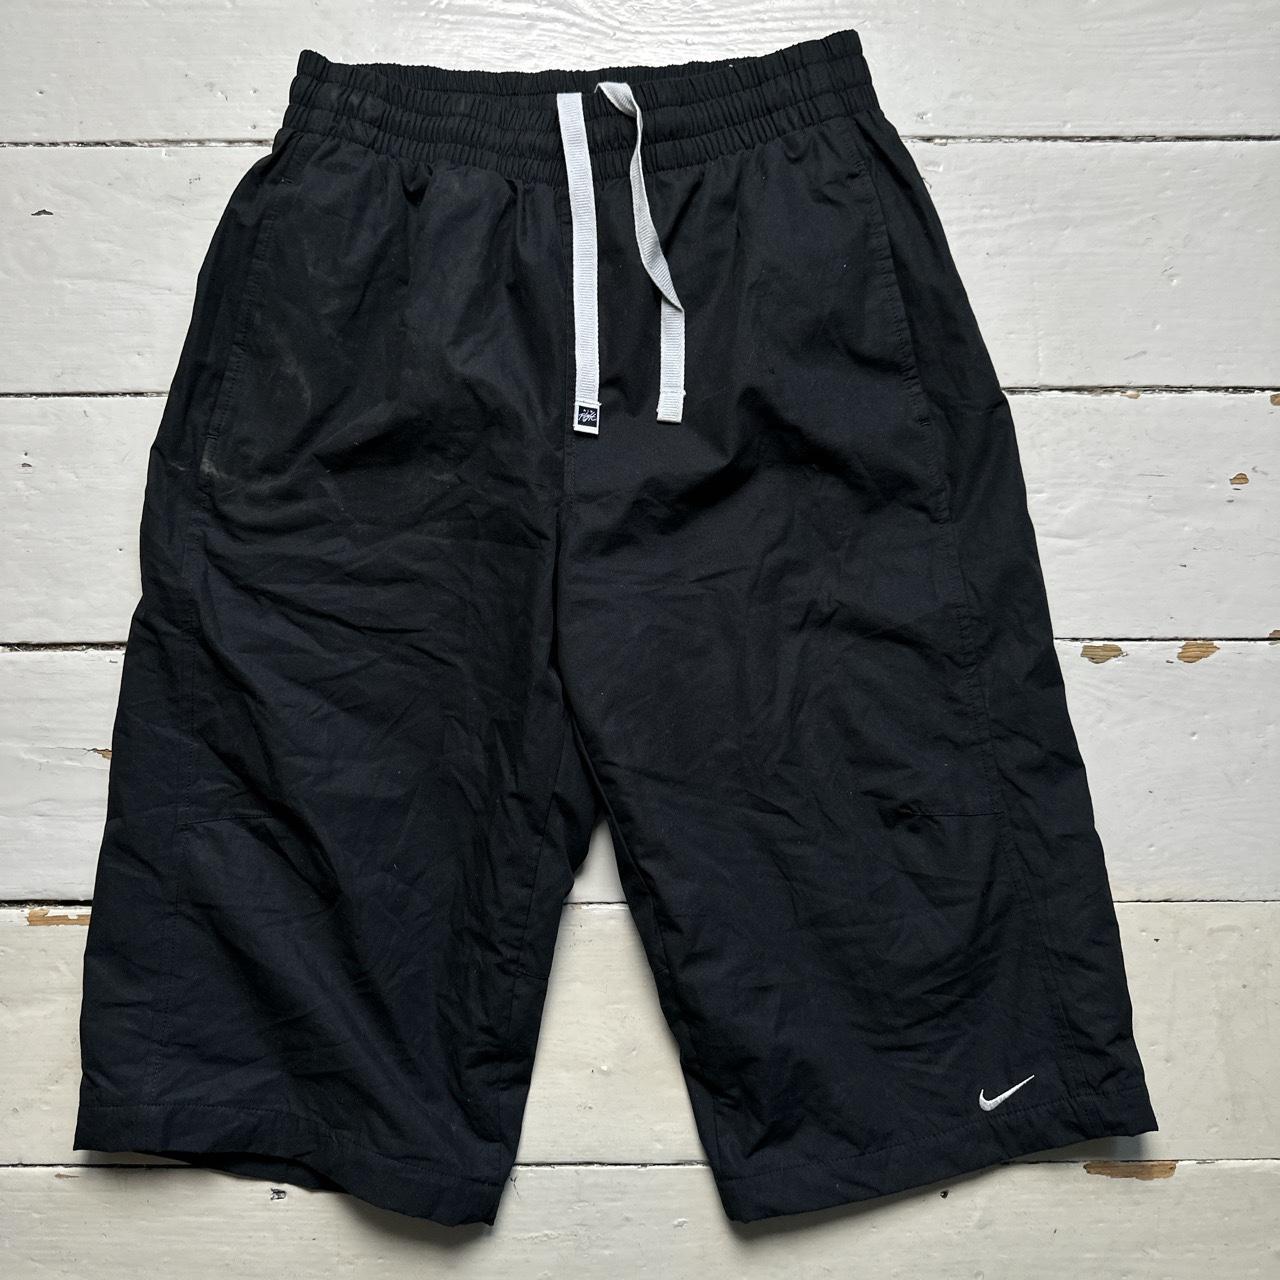 Nike Air Flight Black and White Shell Track Pant Shorts